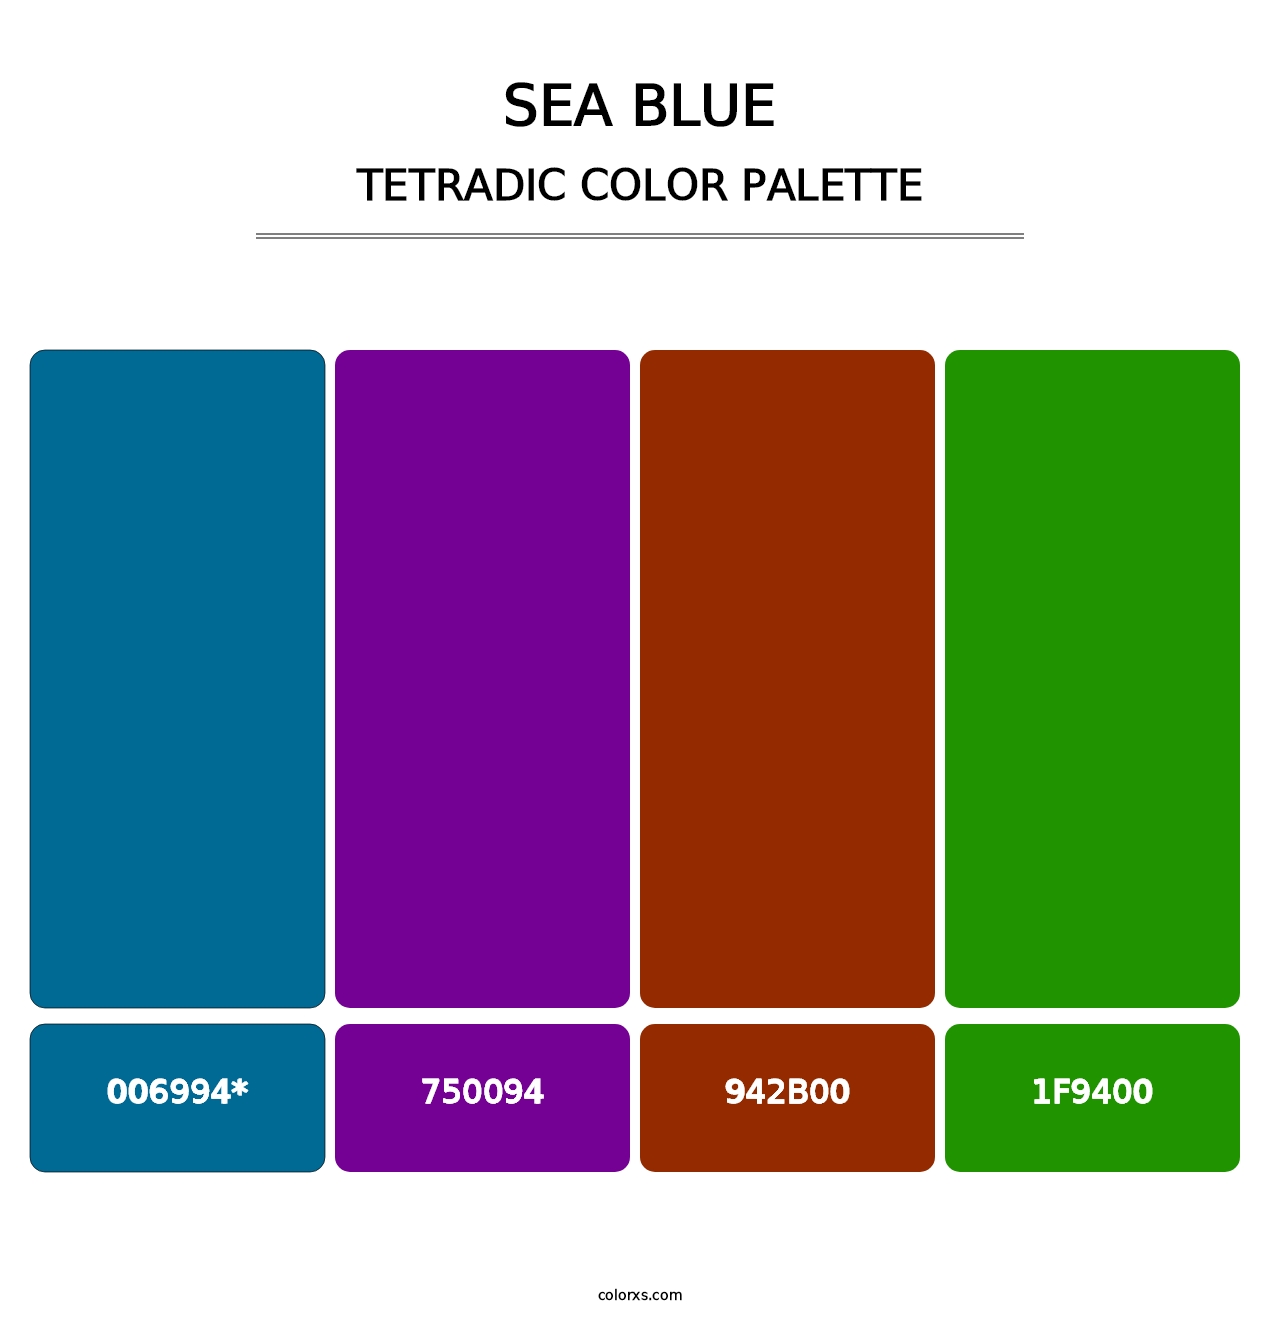 Sea Blue - Tetradic Color Palette